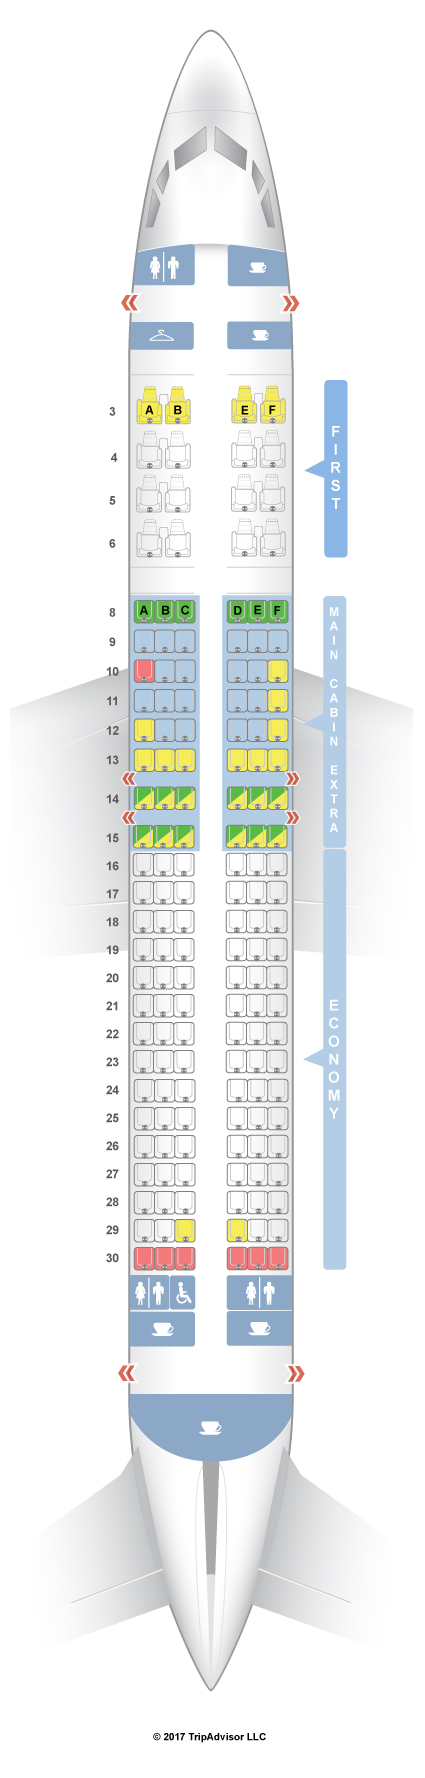 American Airlines Flight Information - SeatGuru